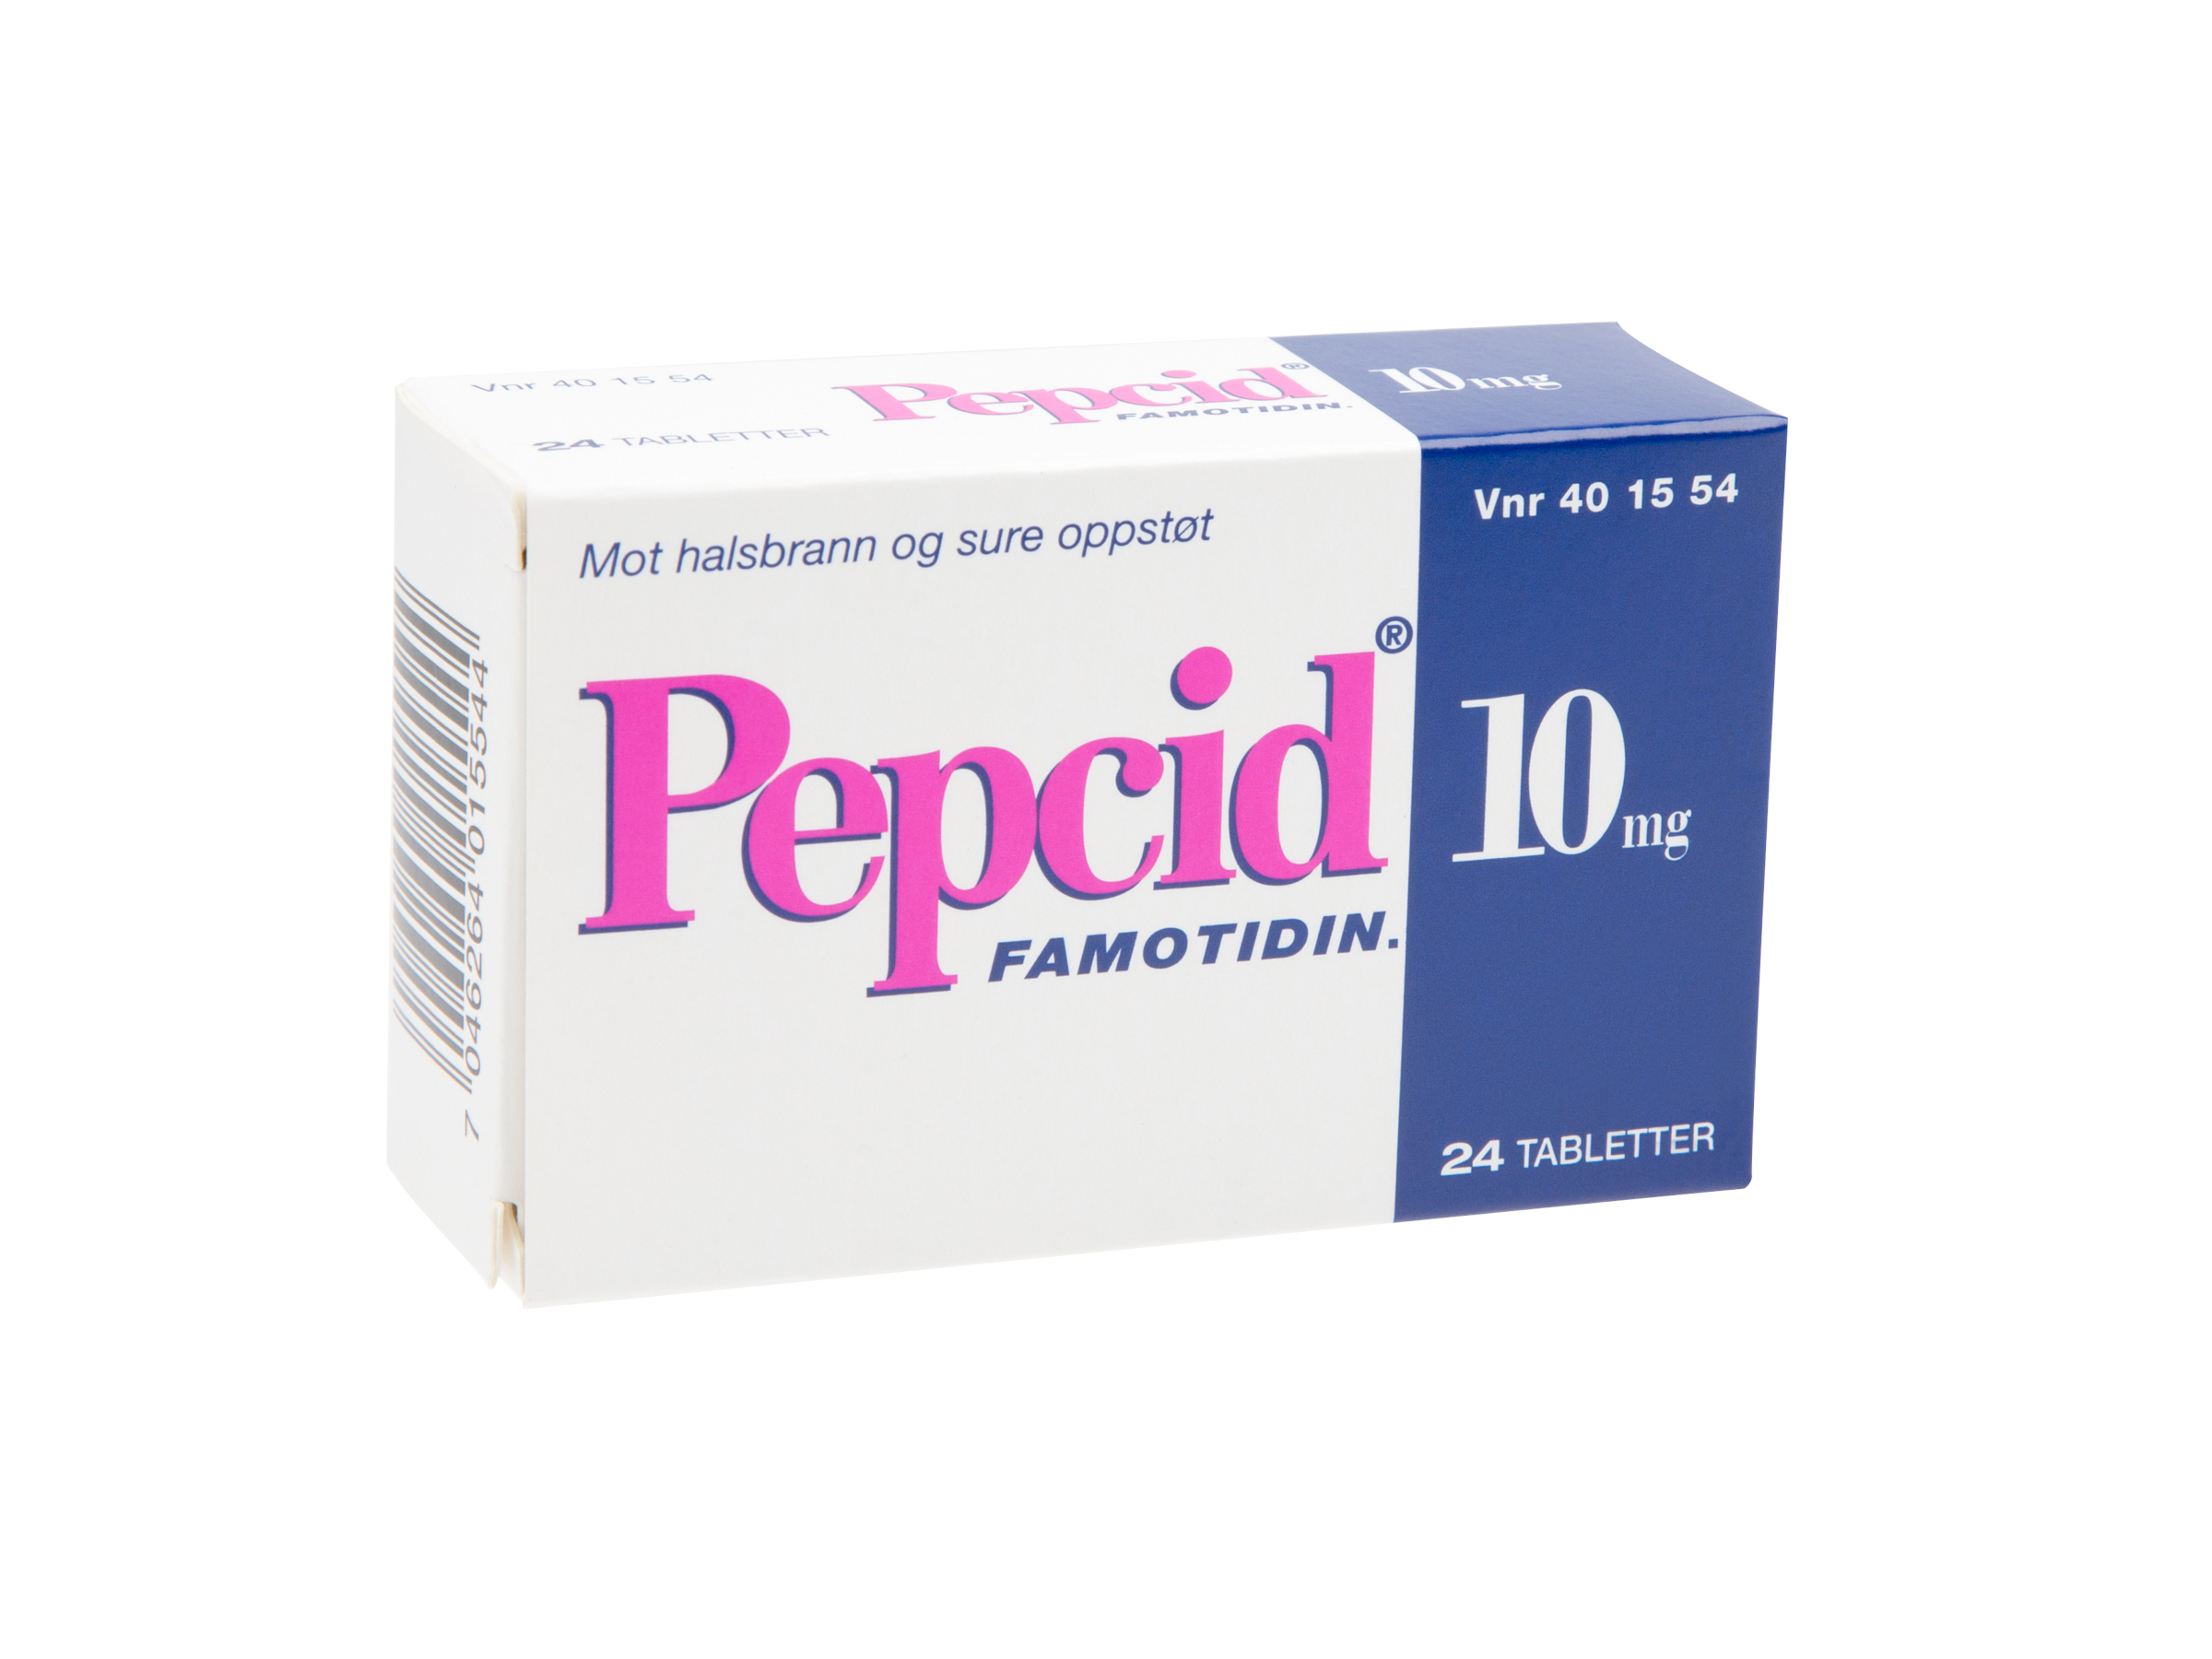 Pepcid Tabletter 10mg, 24 stk. på brett